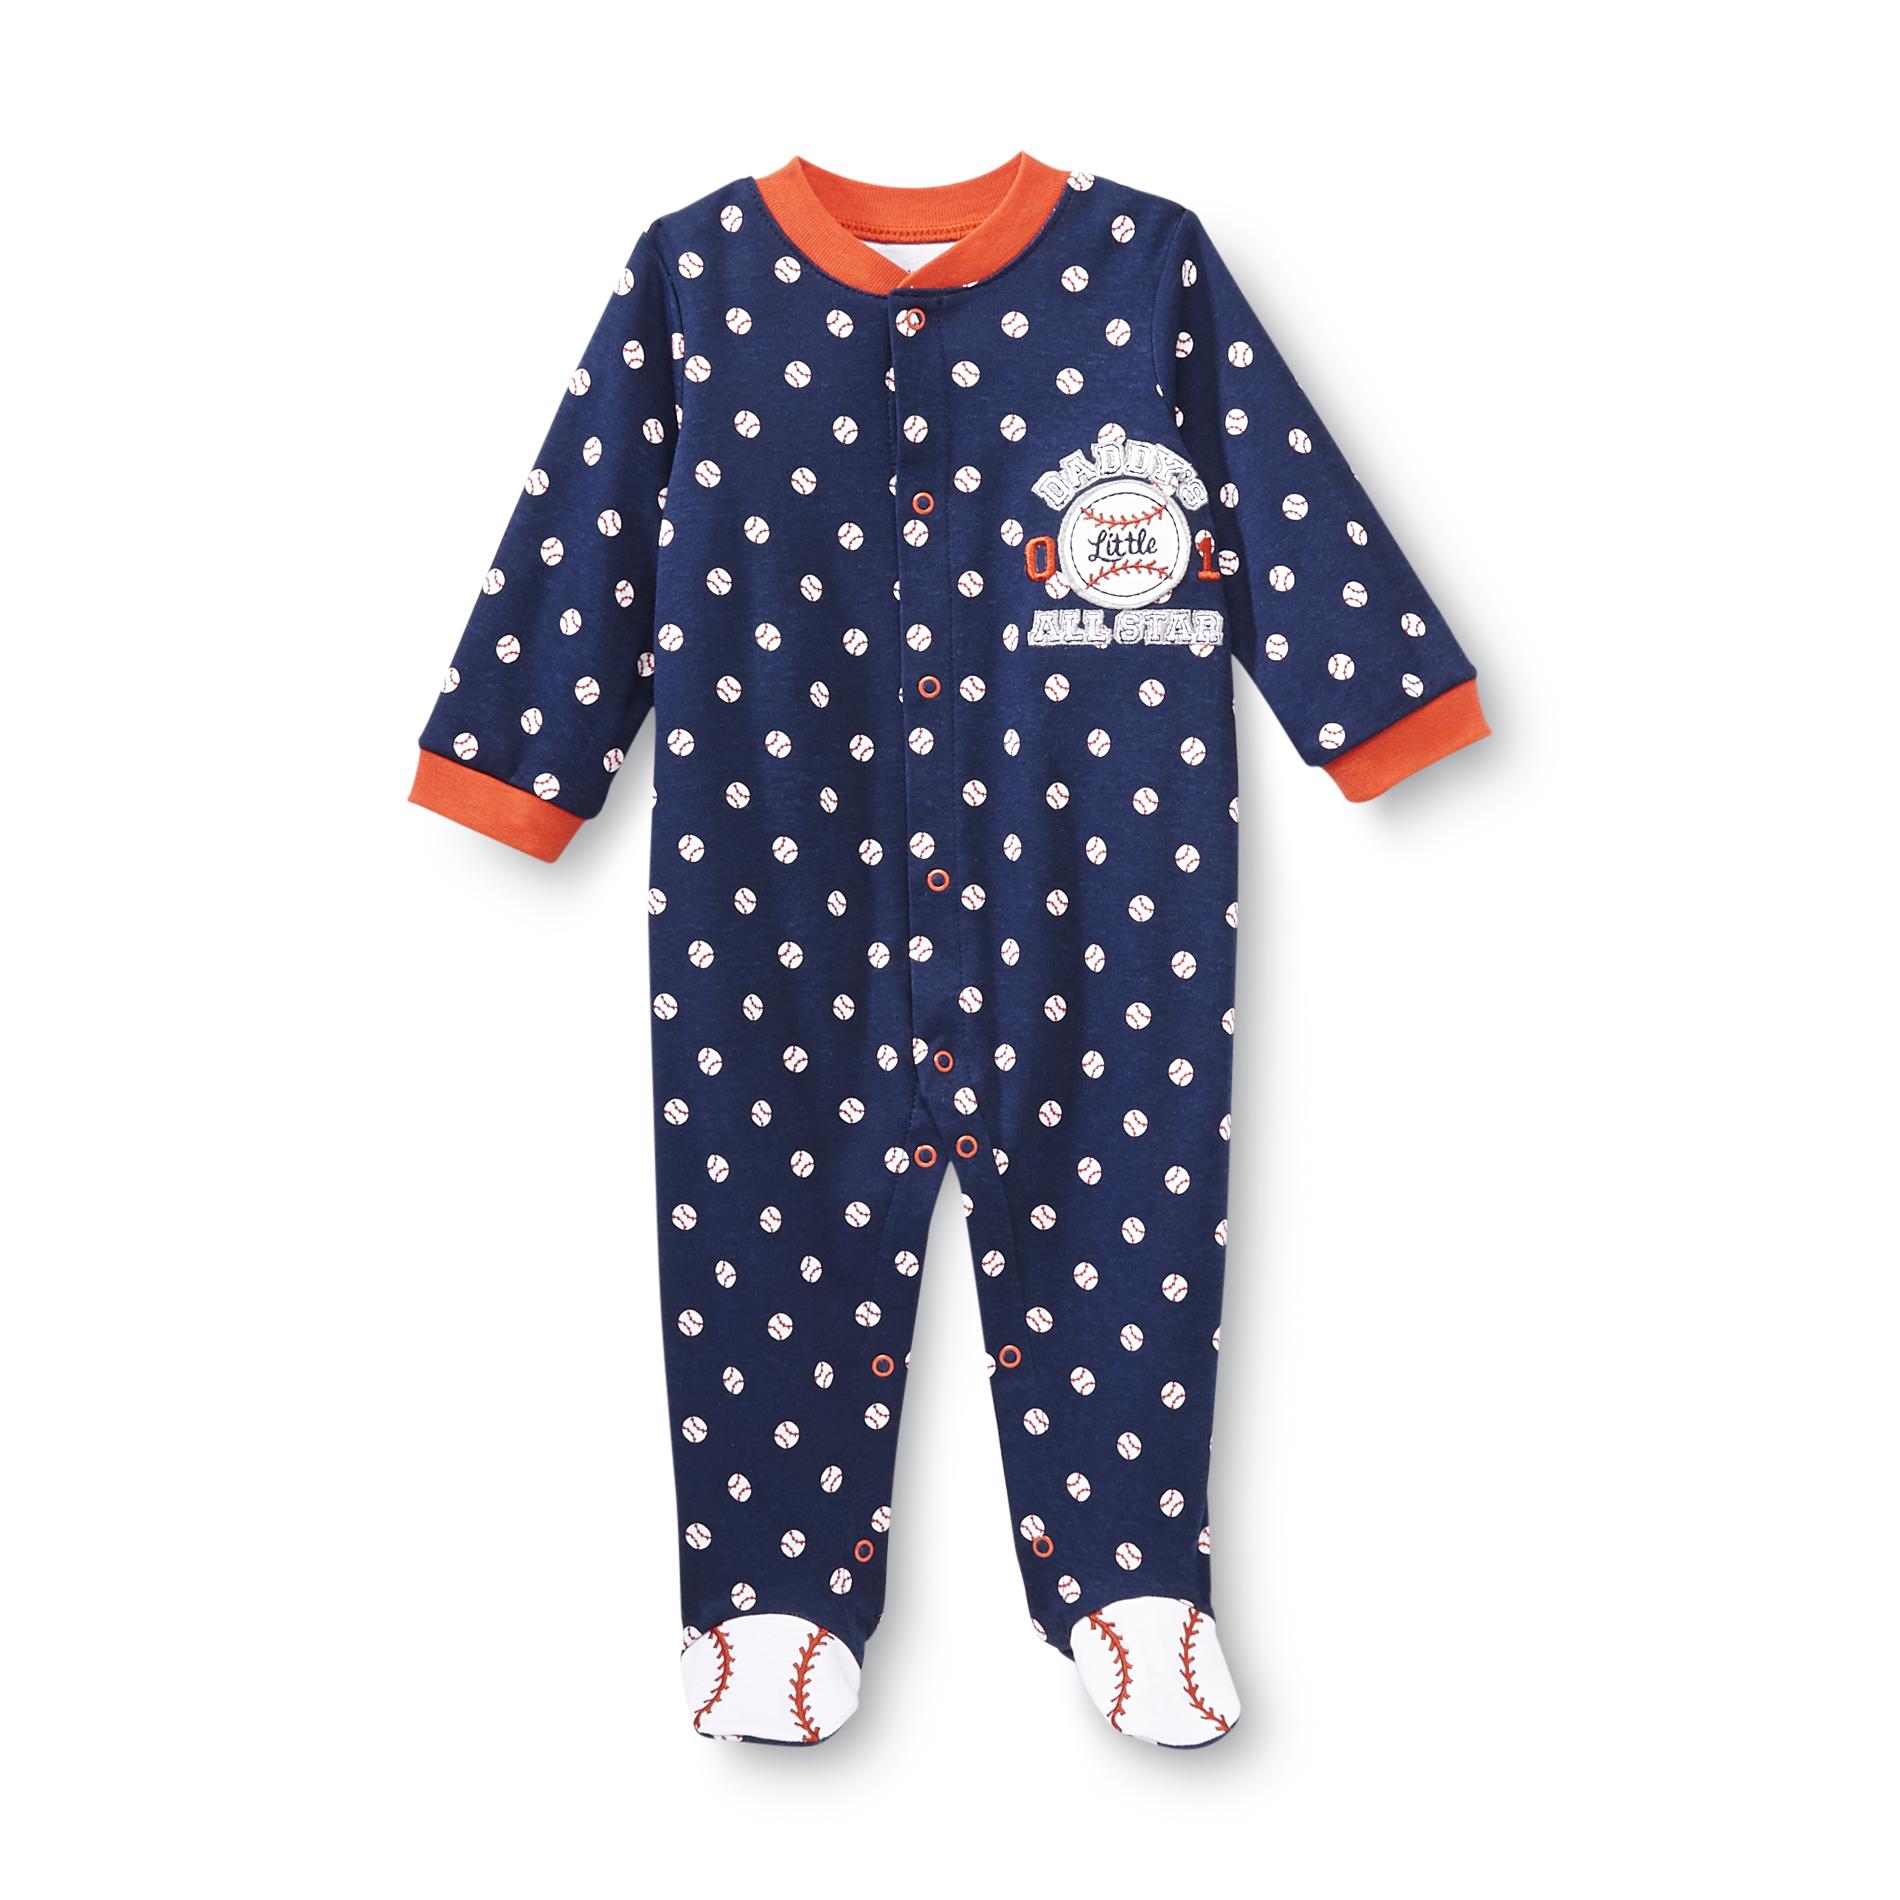 Small Wonders Newborn Boy's Sleeper Pajamas - Baseball